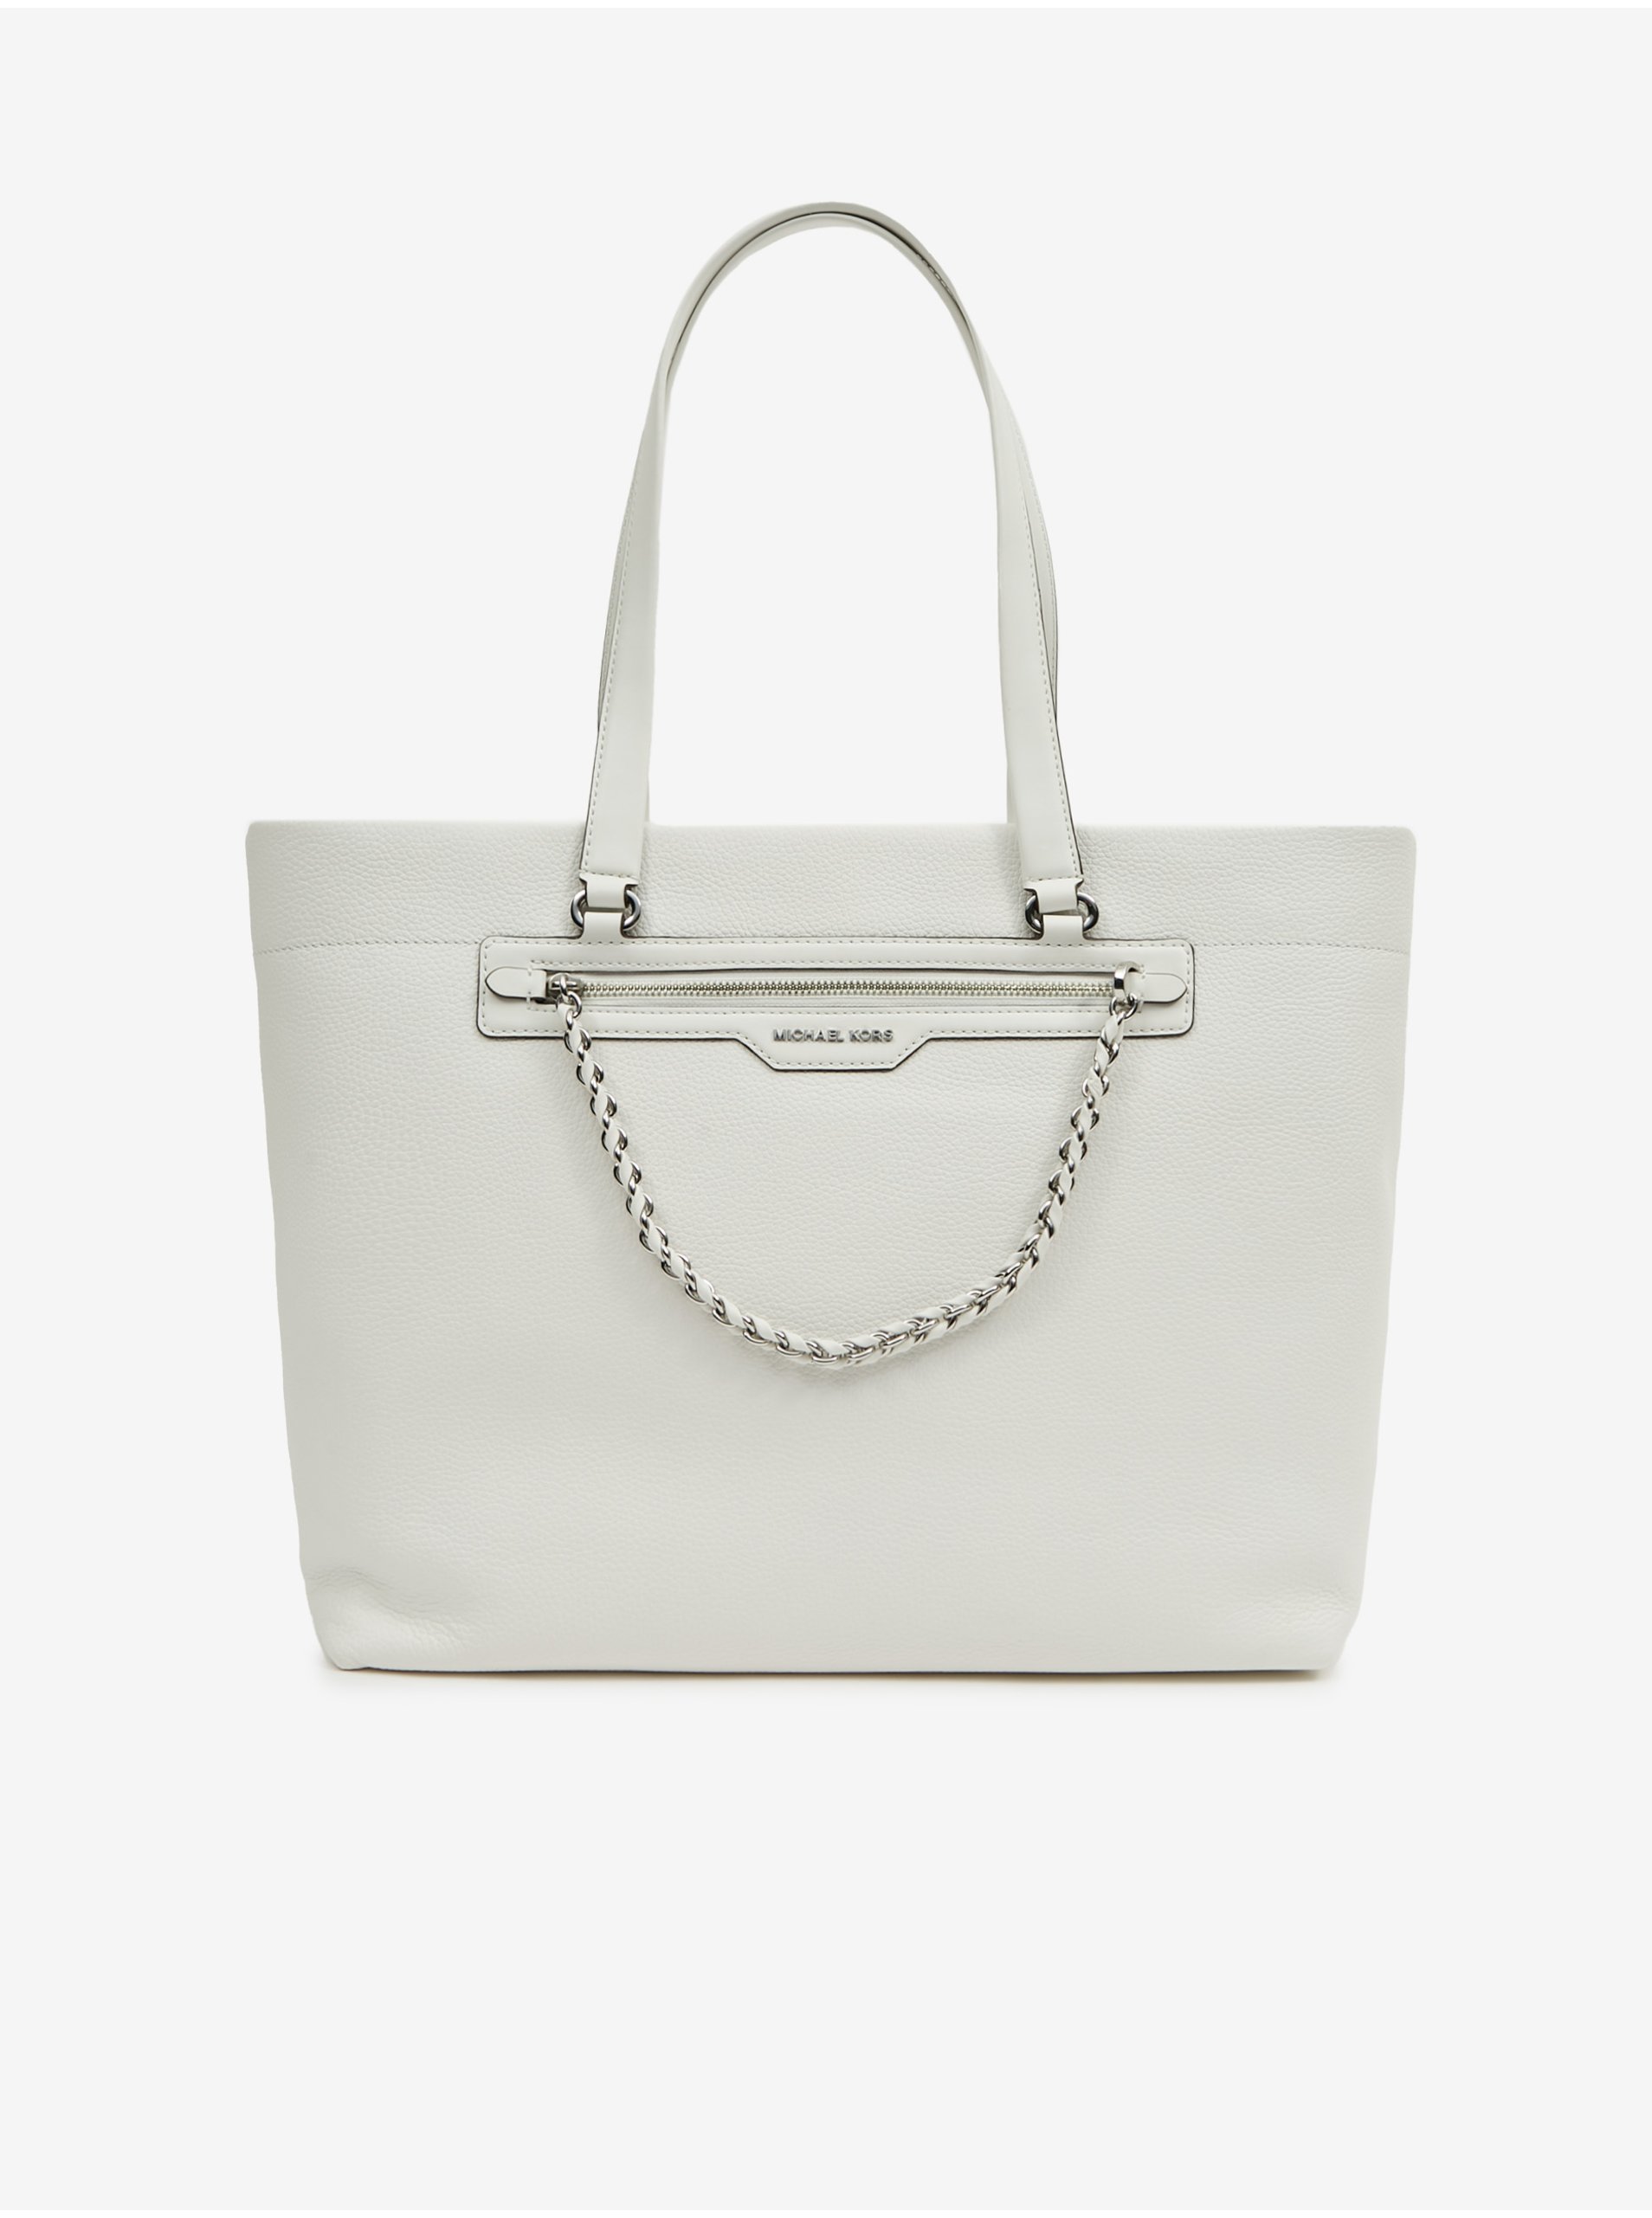 White Women's Leather Handbag Michael Kors - Ladies